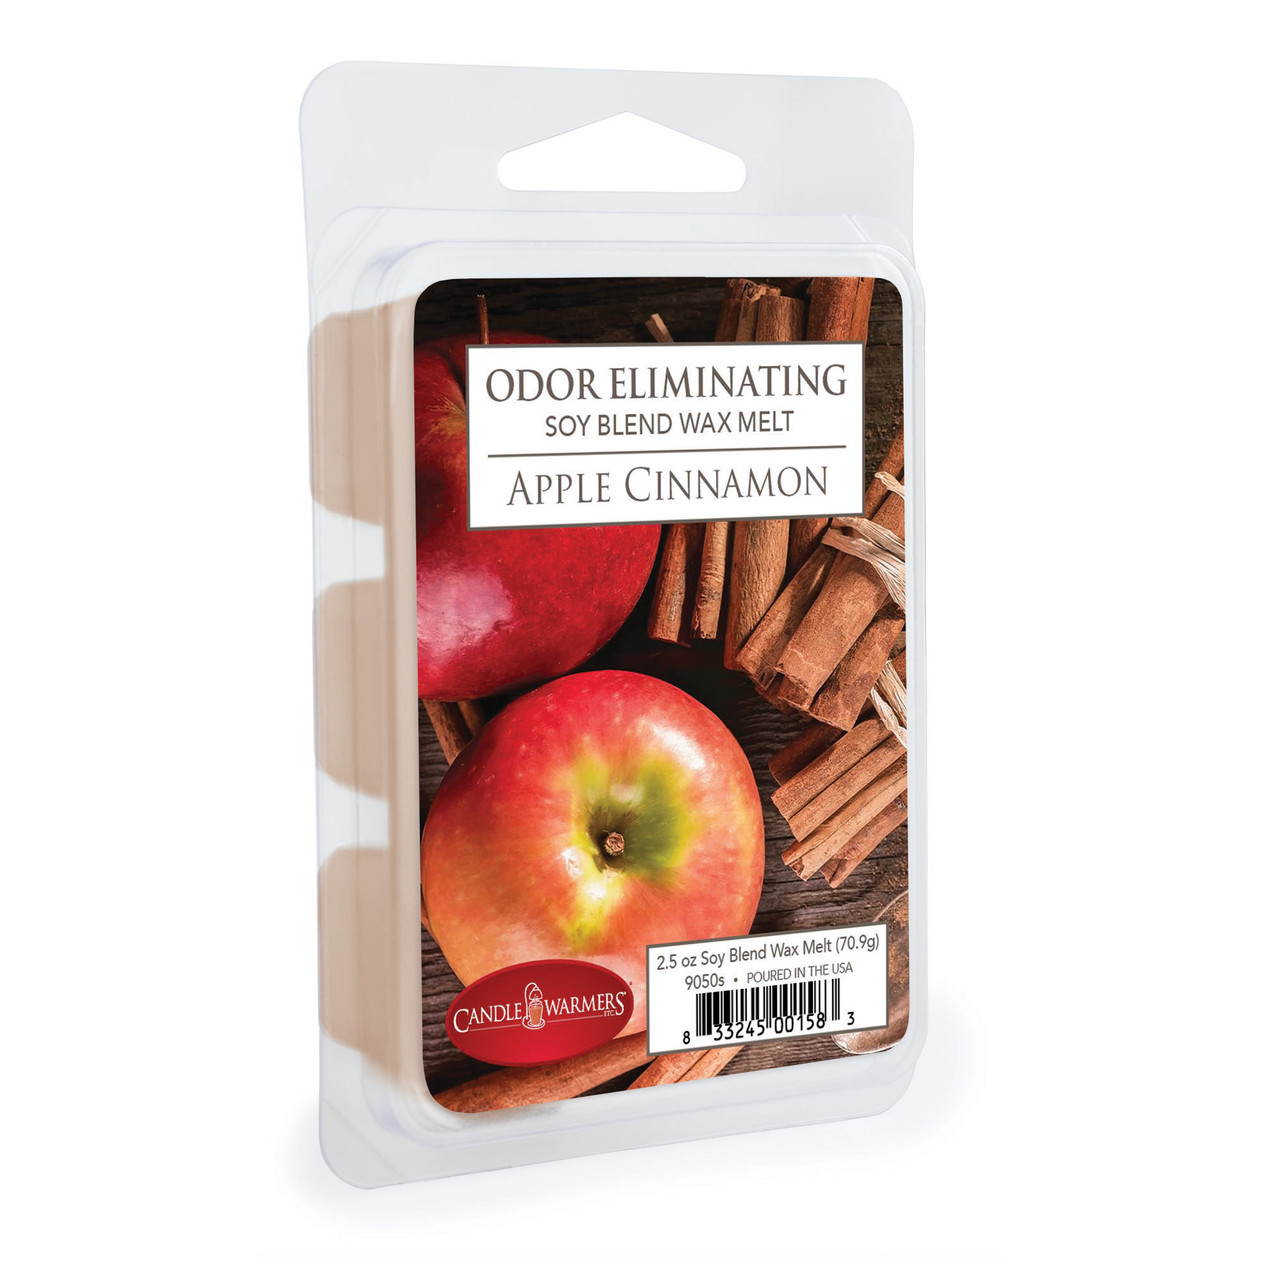 Apple Cinnamon Odor Eliminating Wax Melts